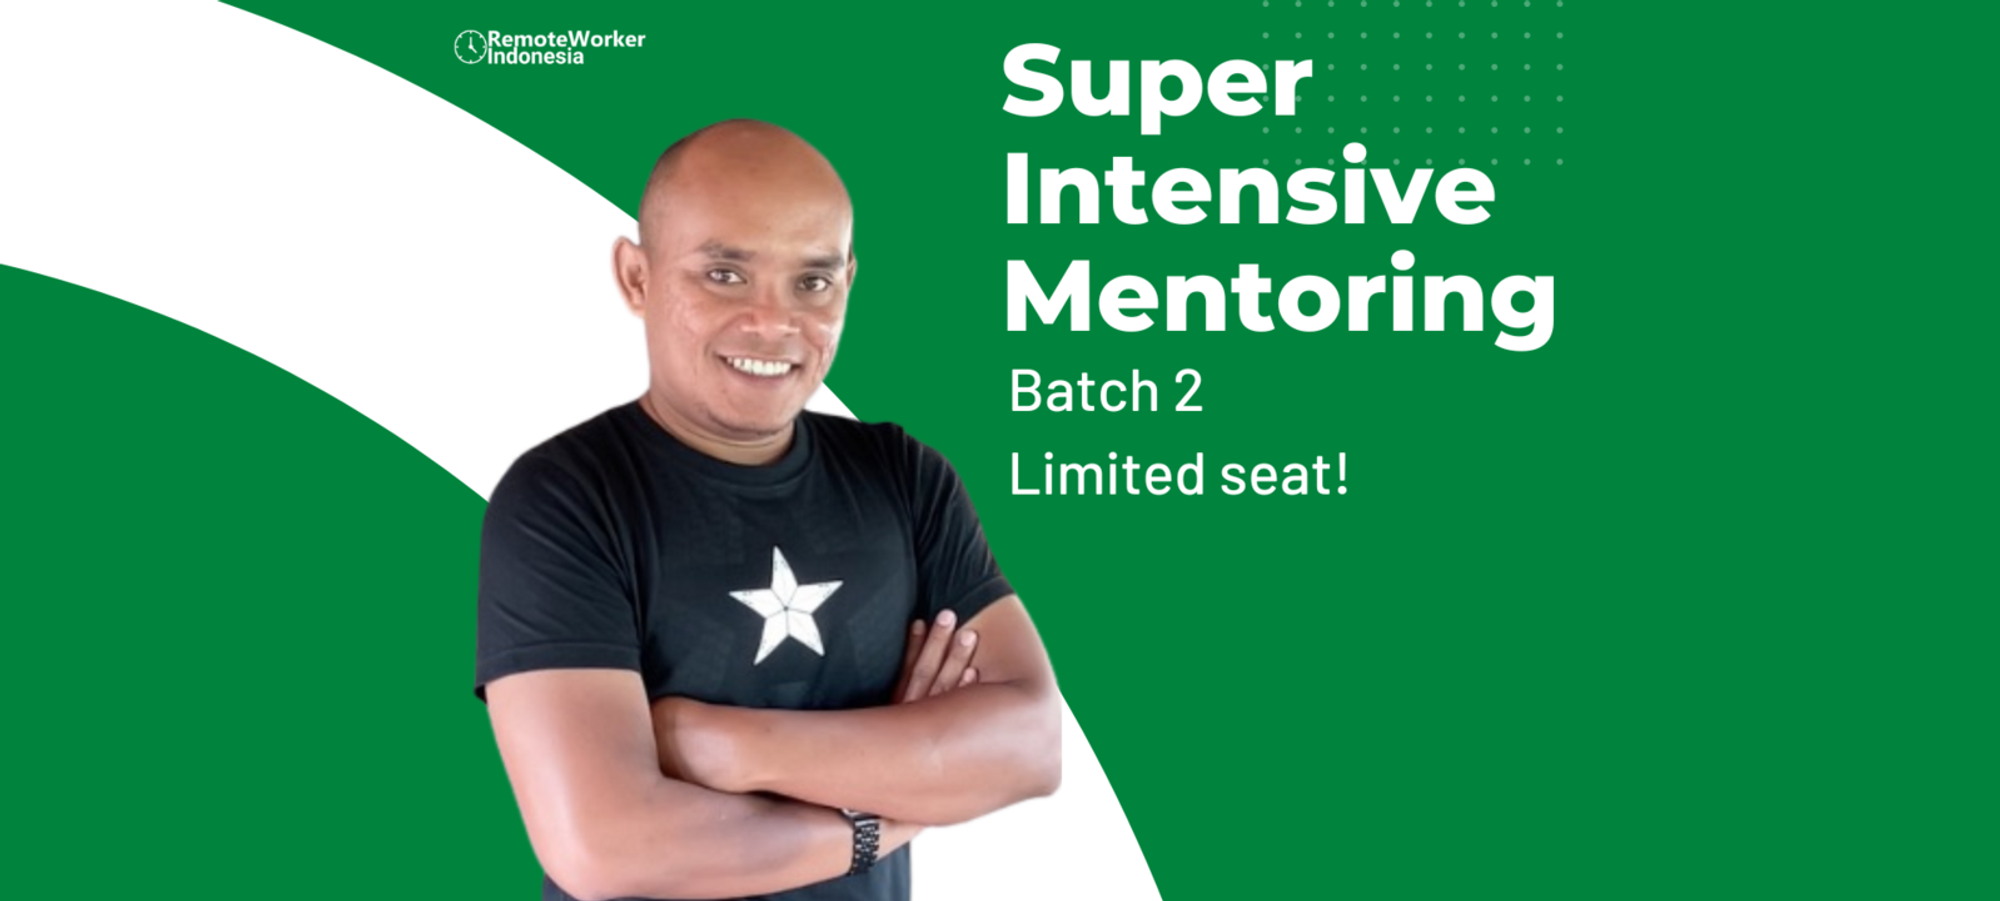 Super Intensive Mentoring - Introduction